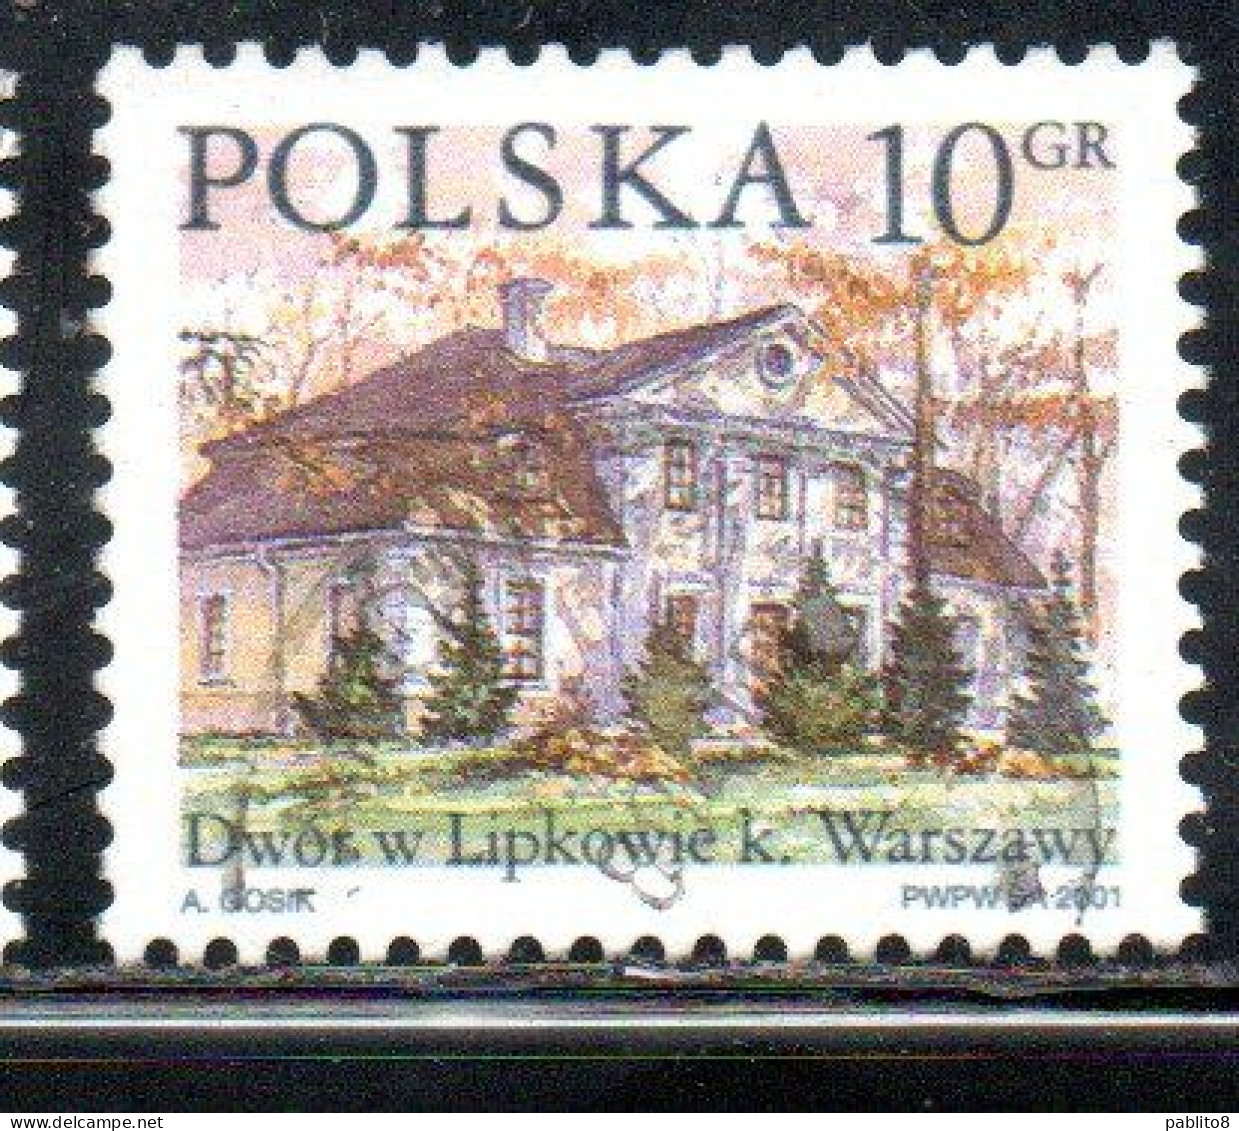 POLONIA POLAND POLSKA 2001 COUNTRY ESTATES LIPKOW 10g USED USATO OBLITERE' - Oblitérés